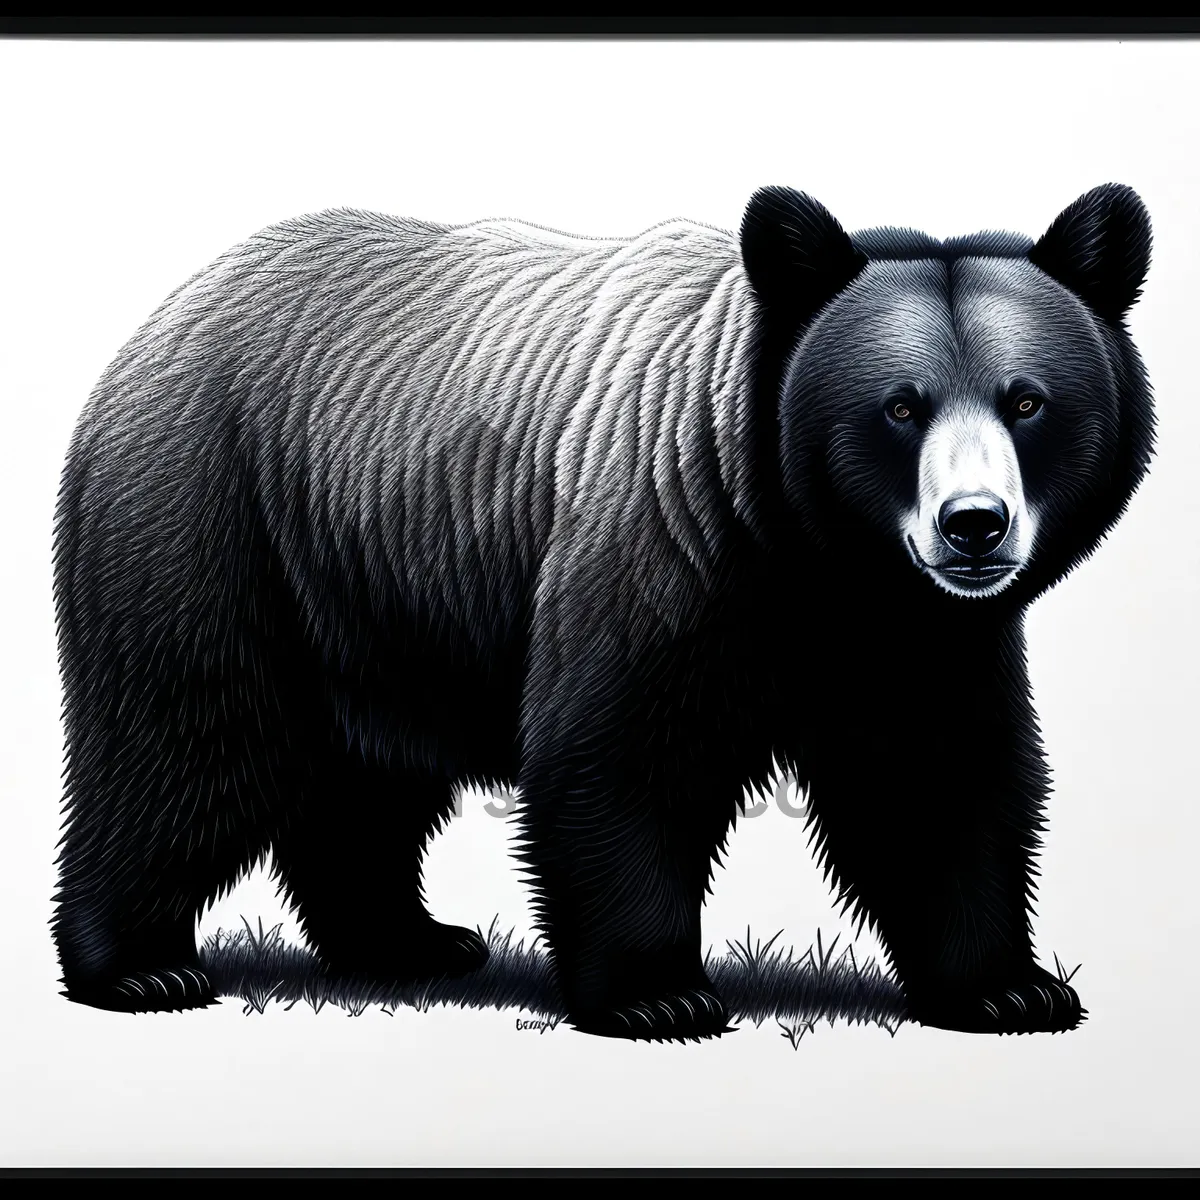 Picture of Wildlife Black Bear - Majestic Predator in the Wild